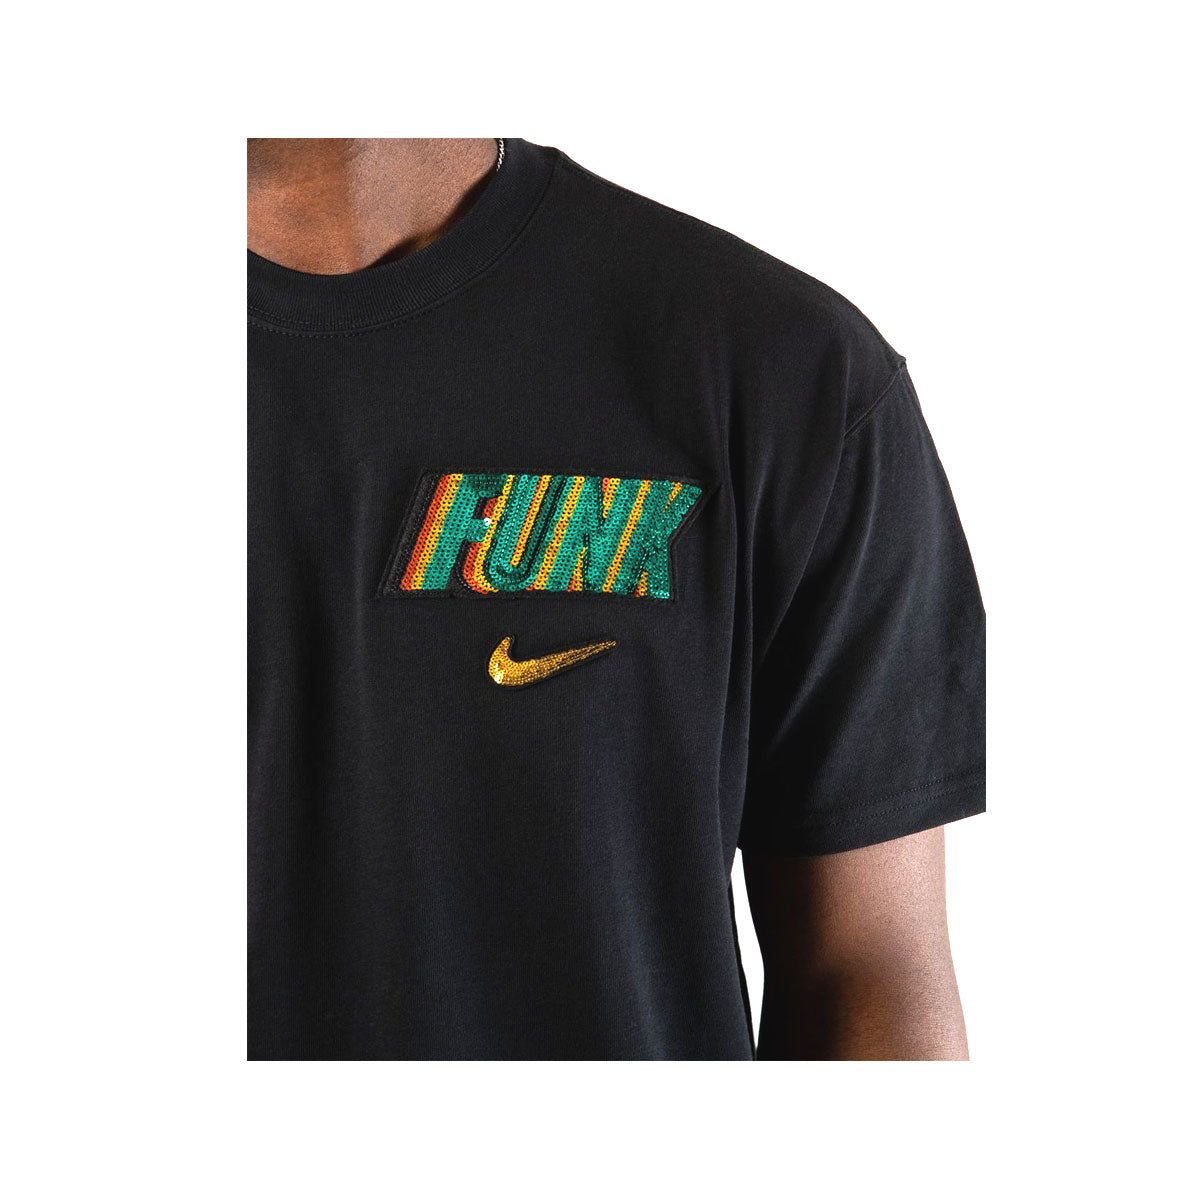 Nike Men's Rayguns Basketball T-Shirt